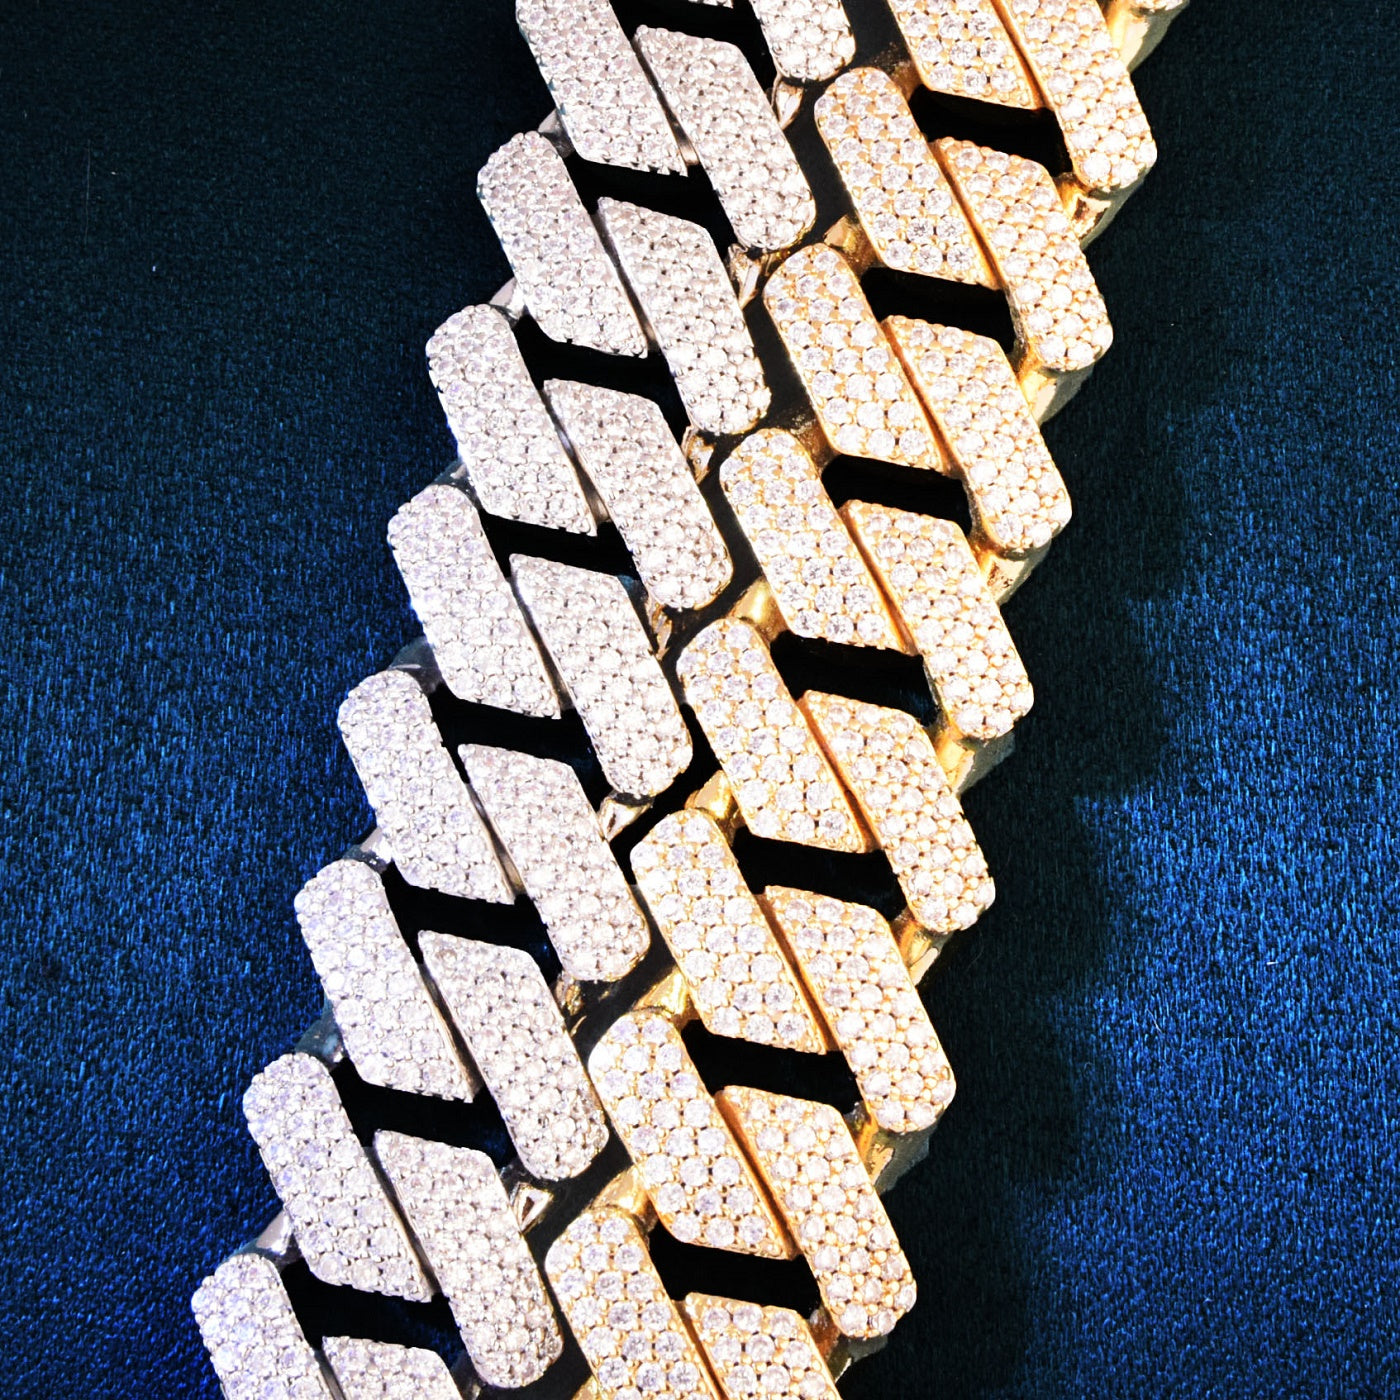 19mm Big Miami Cuban Chain Necklace